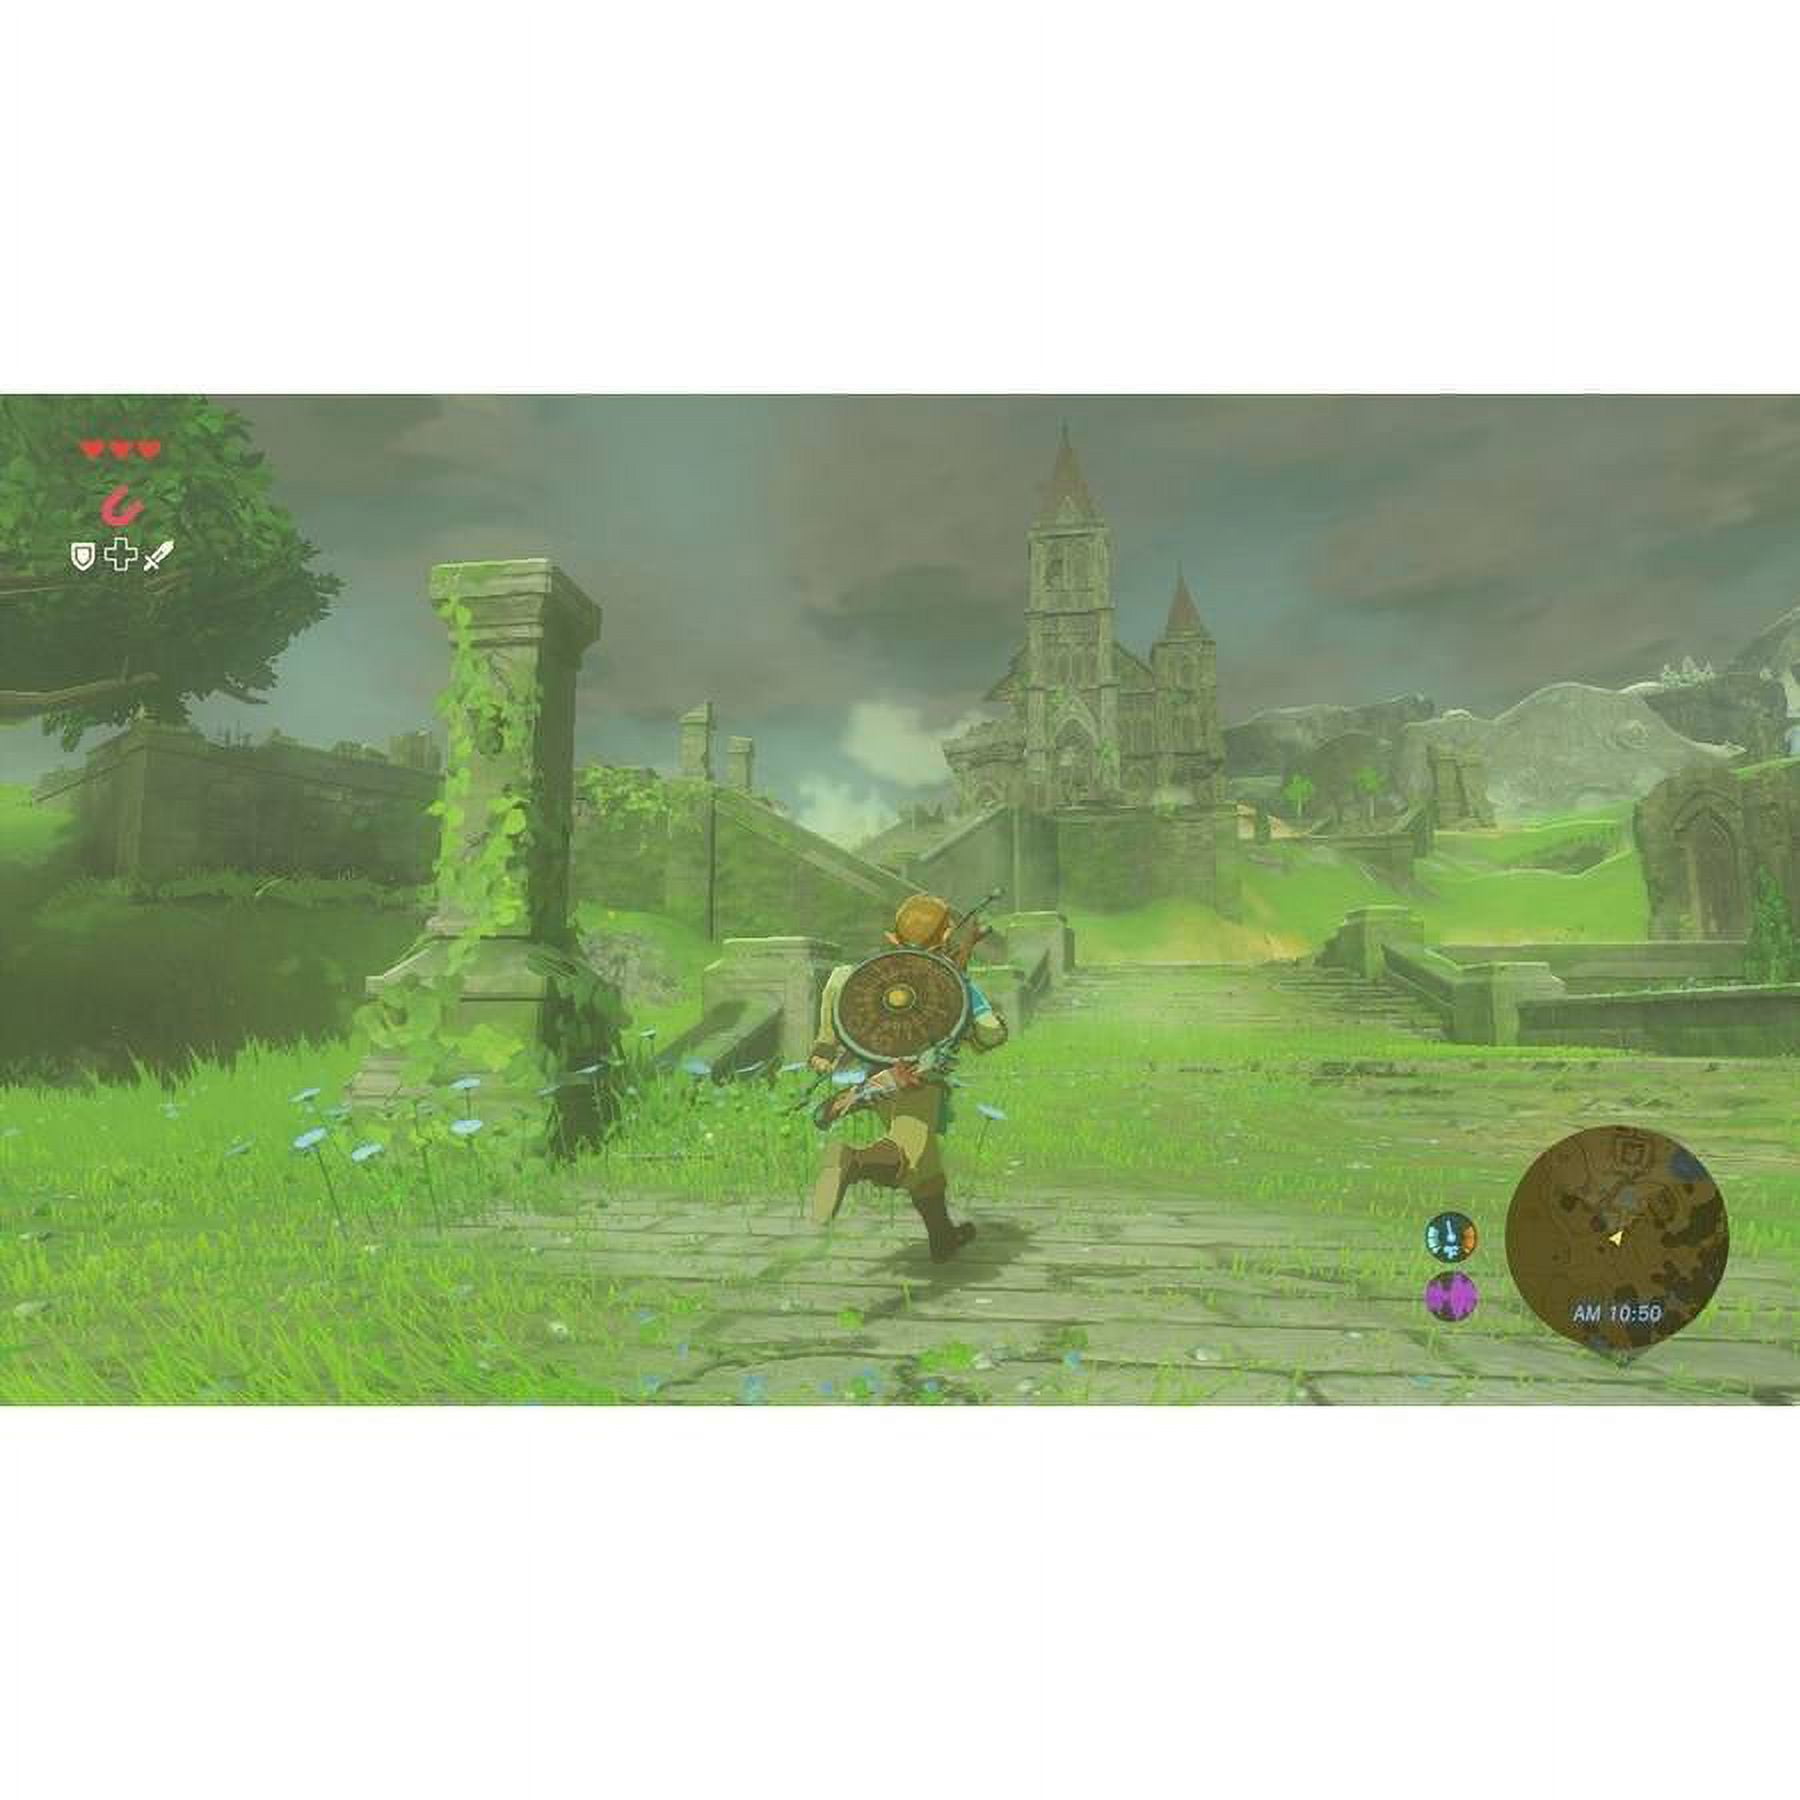 The Legend of Zelda: Breath of the Wild (Wii U) Complete - Video Games, Facebook Marketplace